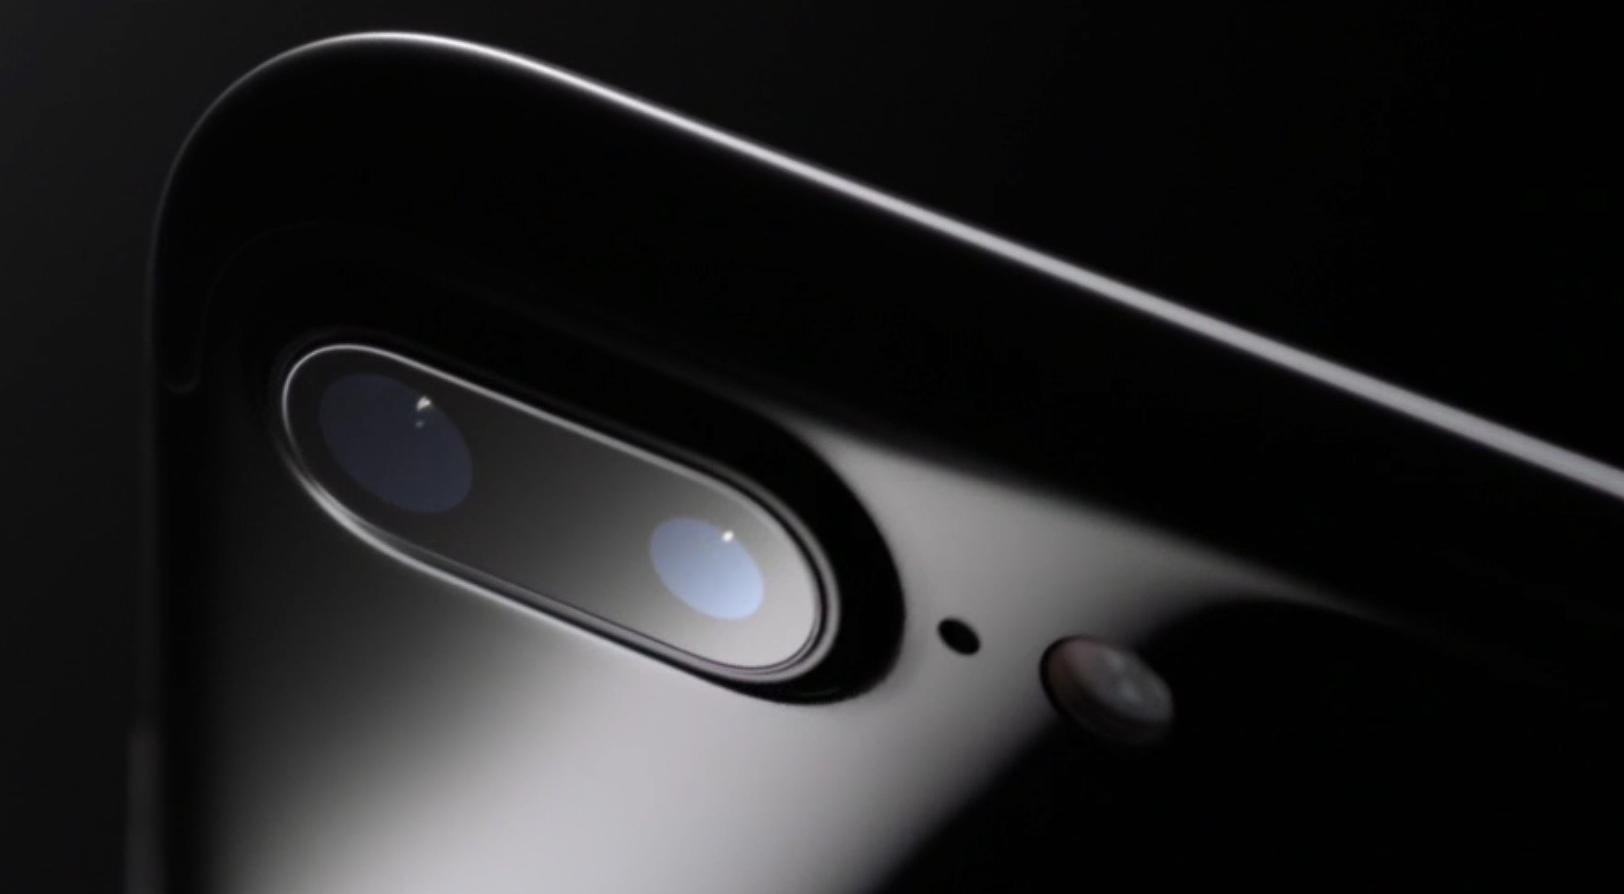 Apple iPhone 7 Plus iSight